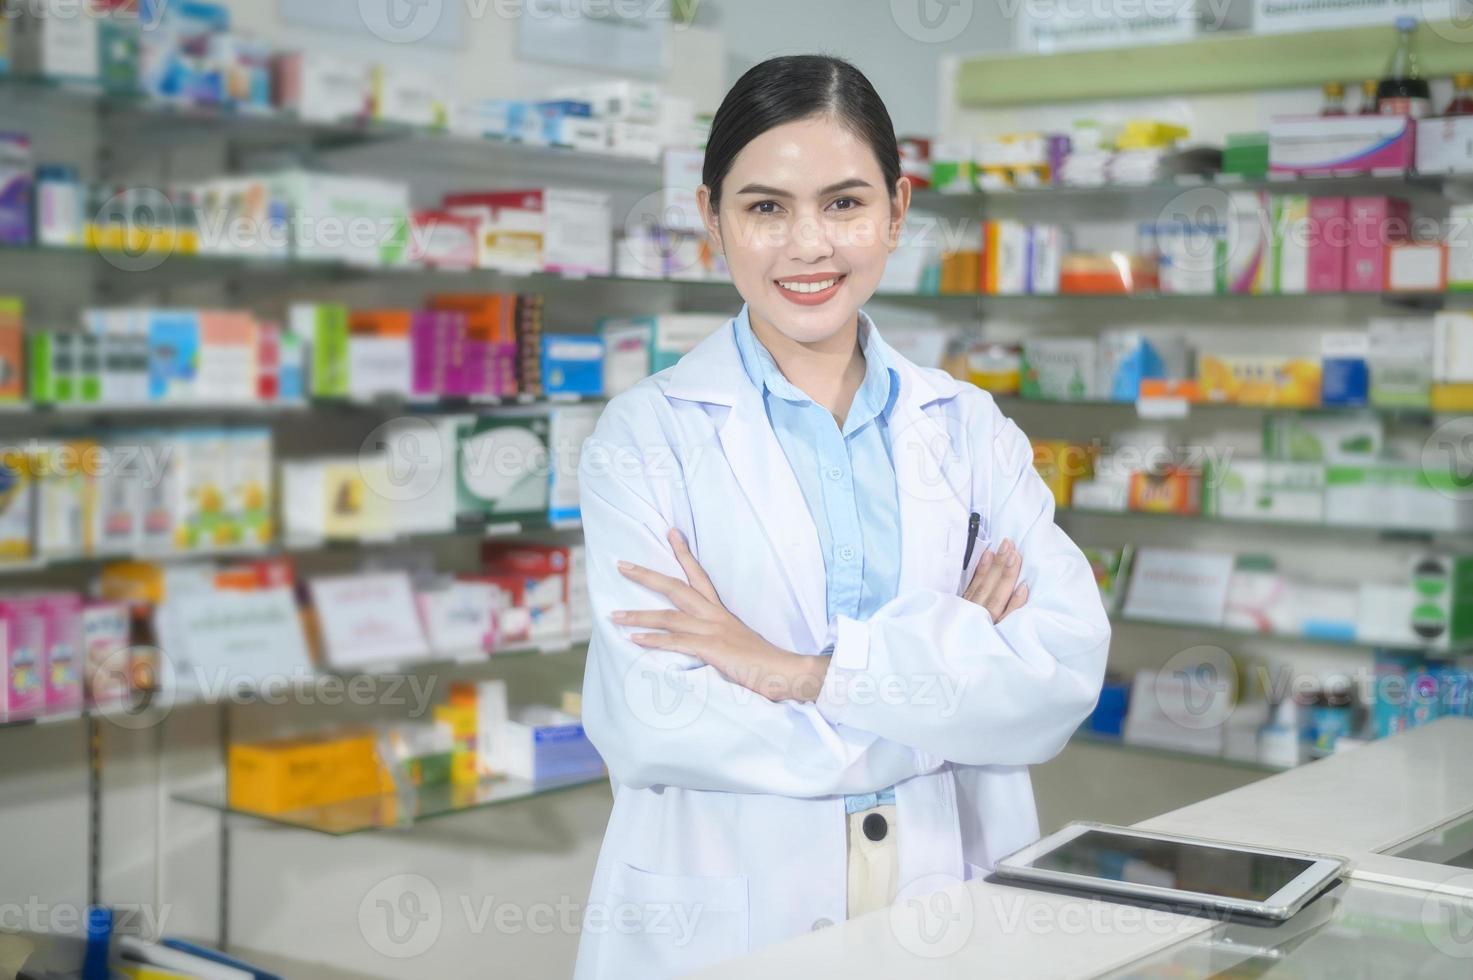 Portrait of female pharmacist working in a modern pharmacy drugstore. photo